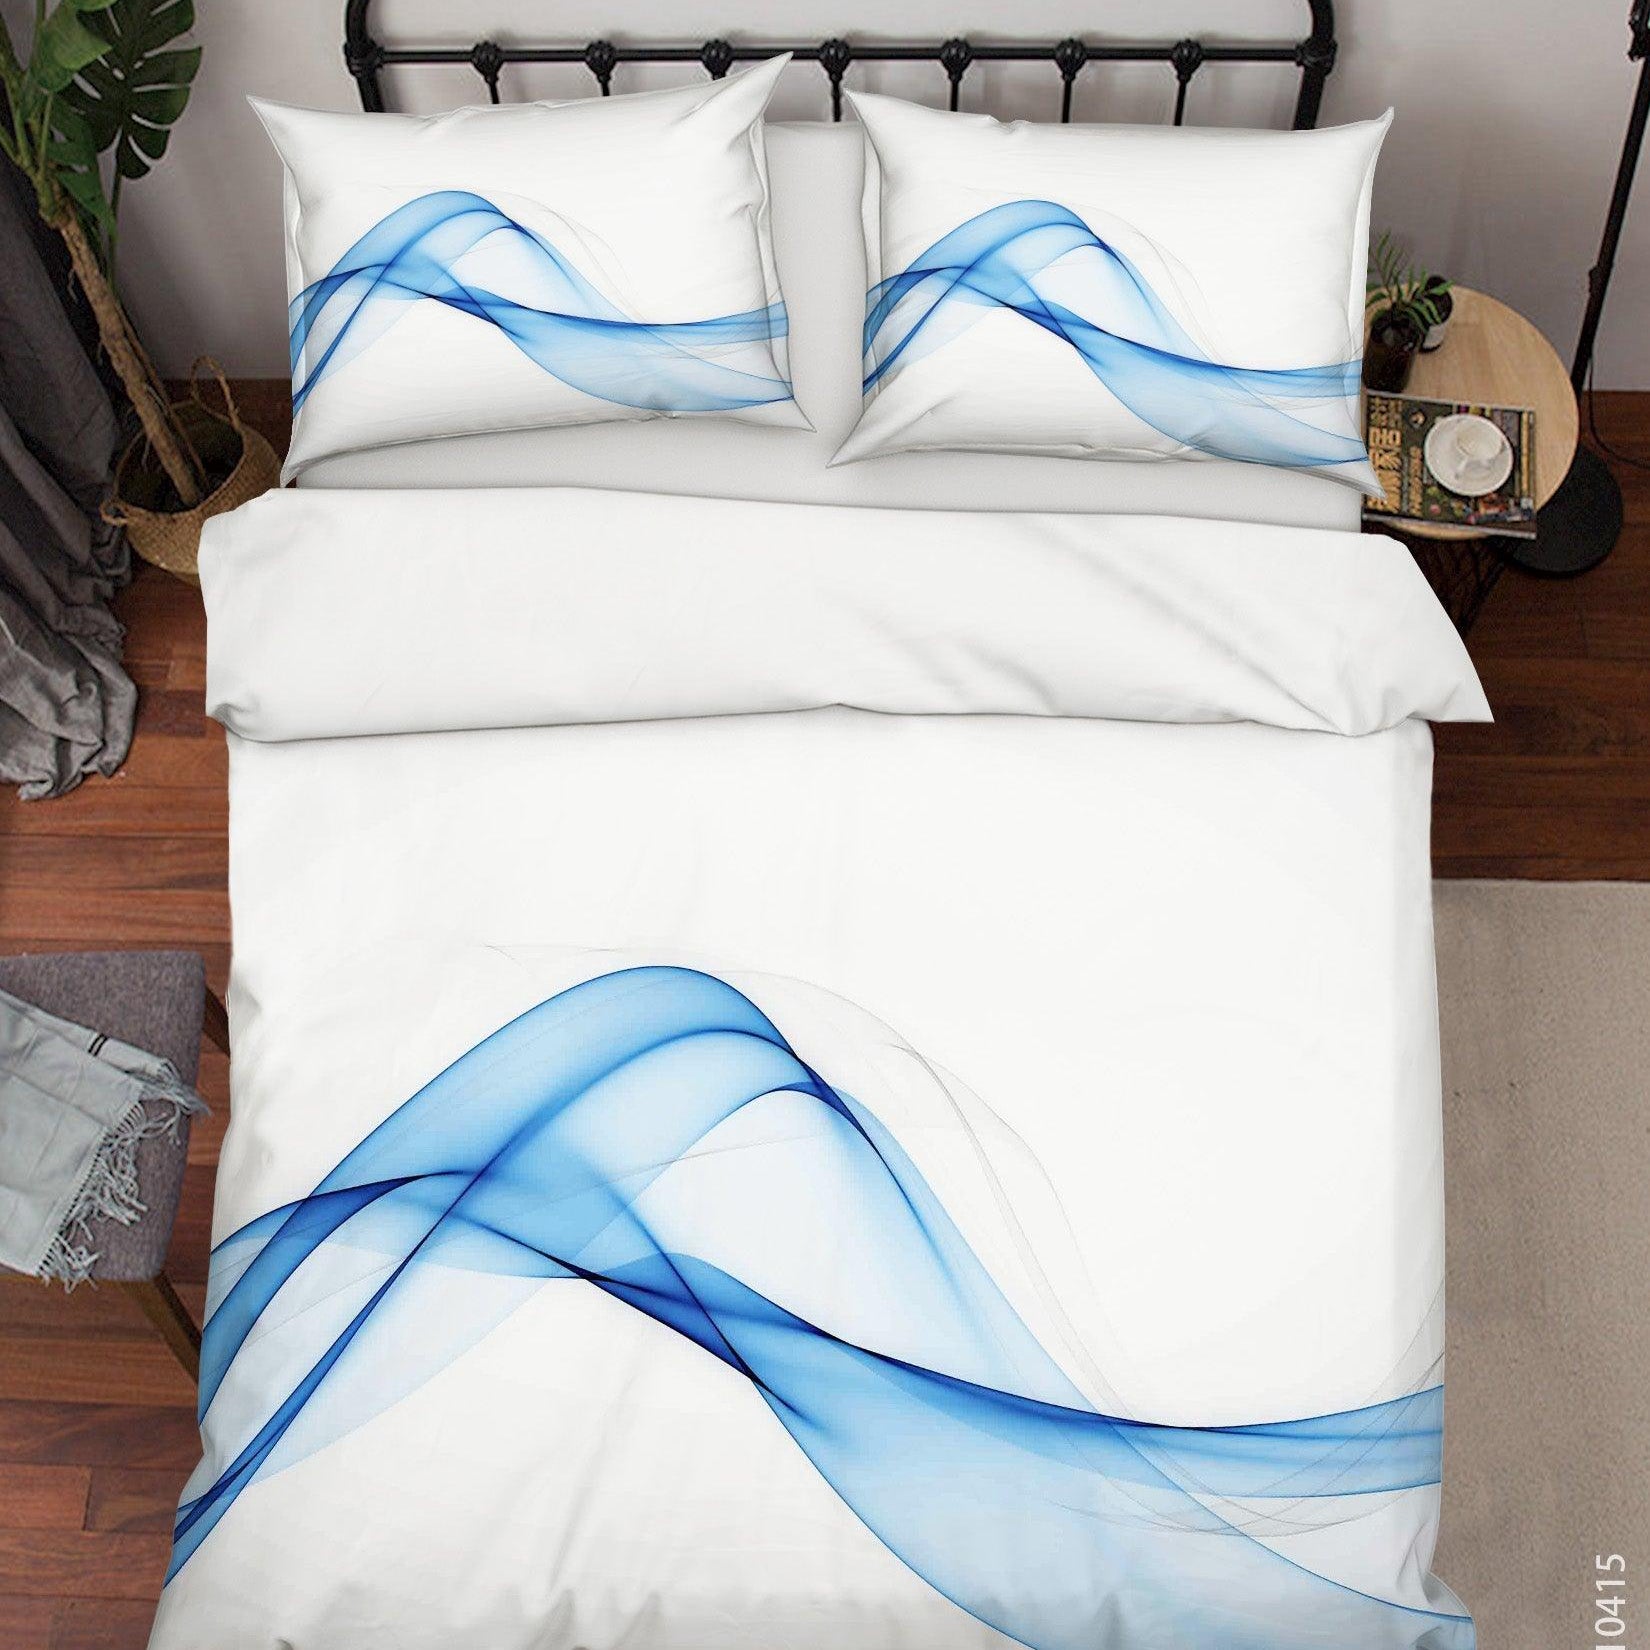 3D Abstract Blue Geometry Quilt Cover Set Bedding Set Duvet Cover Pillowcases 71- Jess Art Decoration